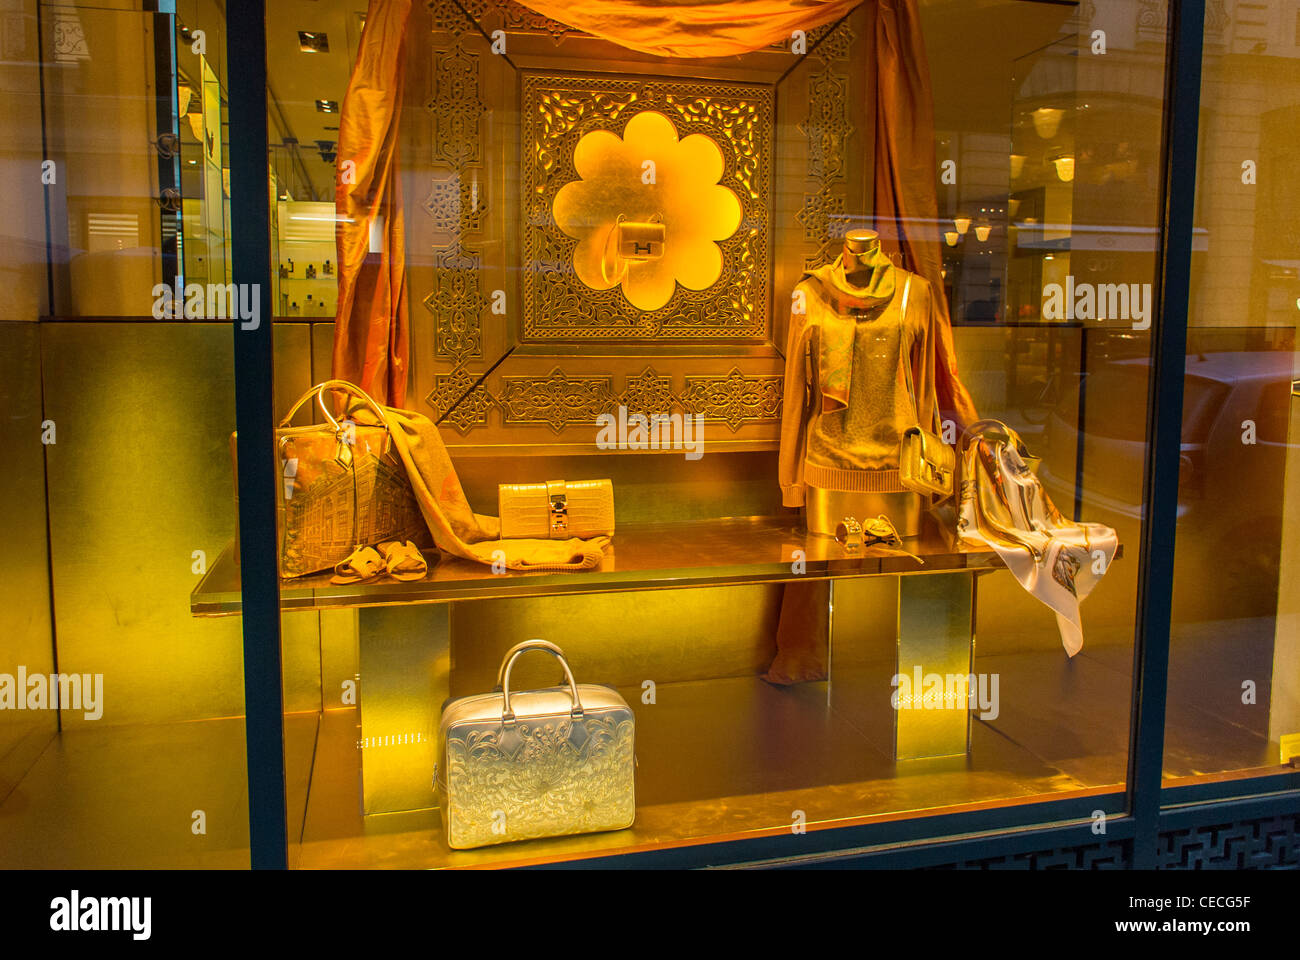 luxury brand window display